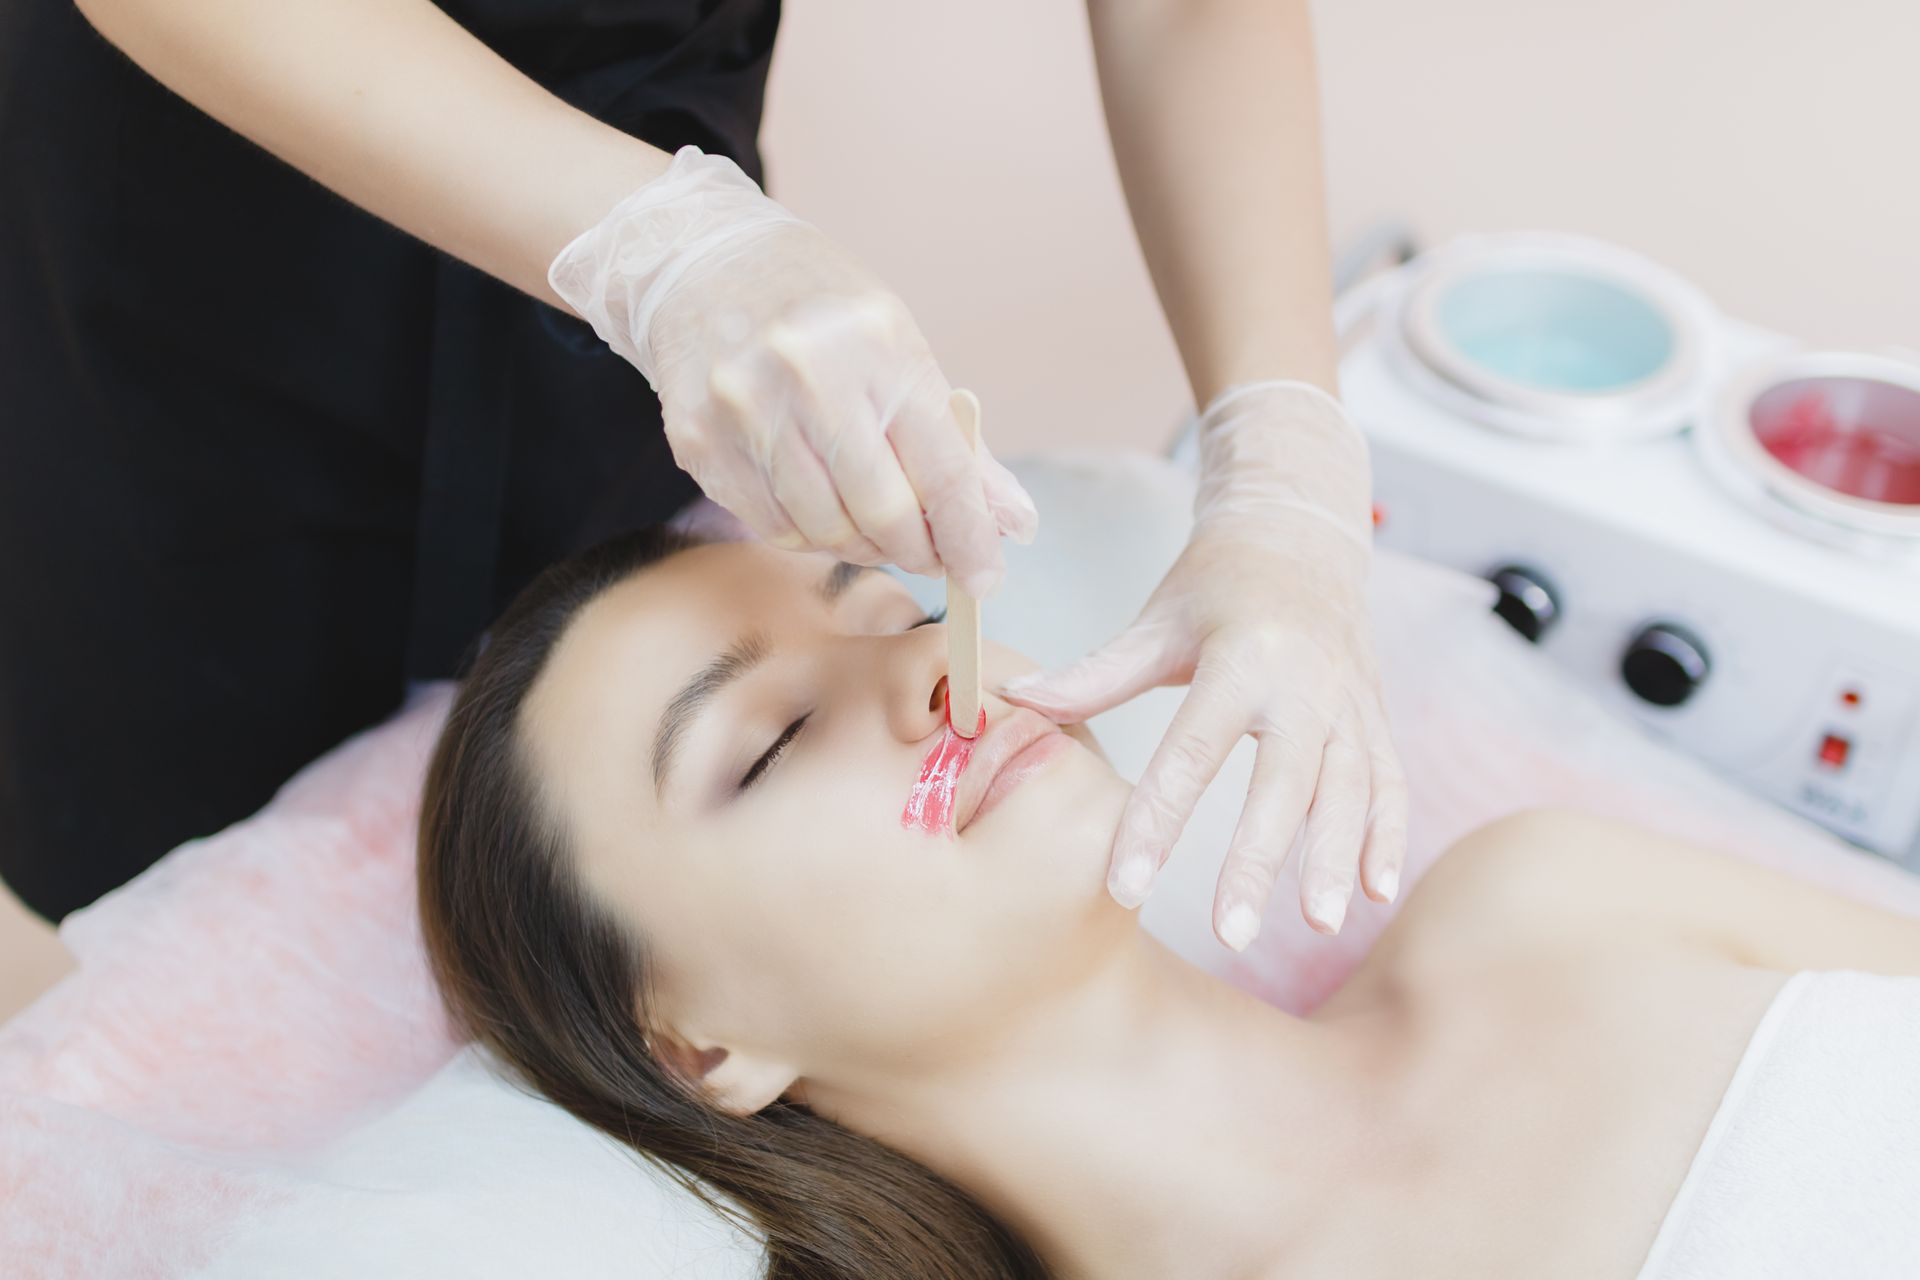 A woman is getting her lips waxed in a beauty salon.